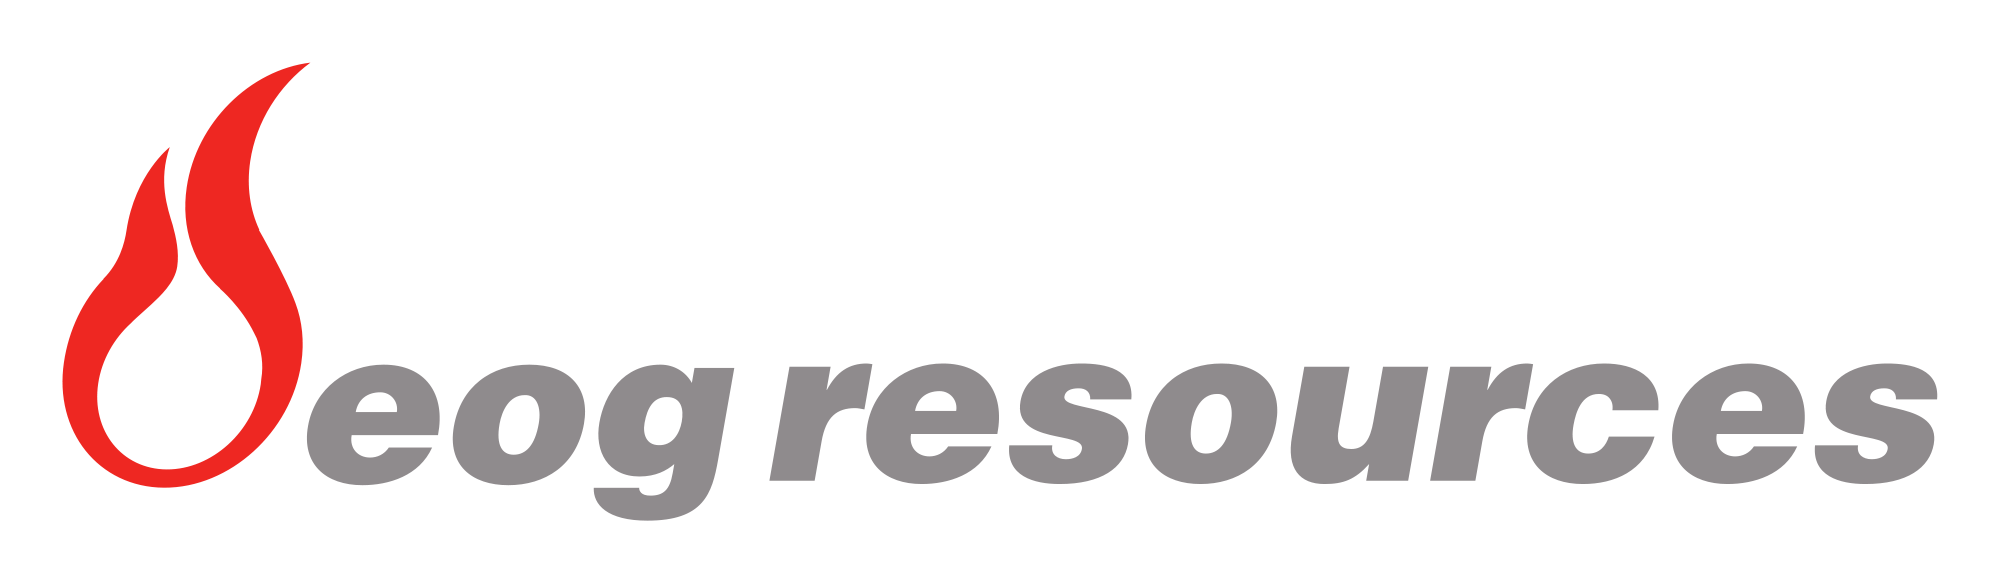 Logo Eog Resources PNG - 112737